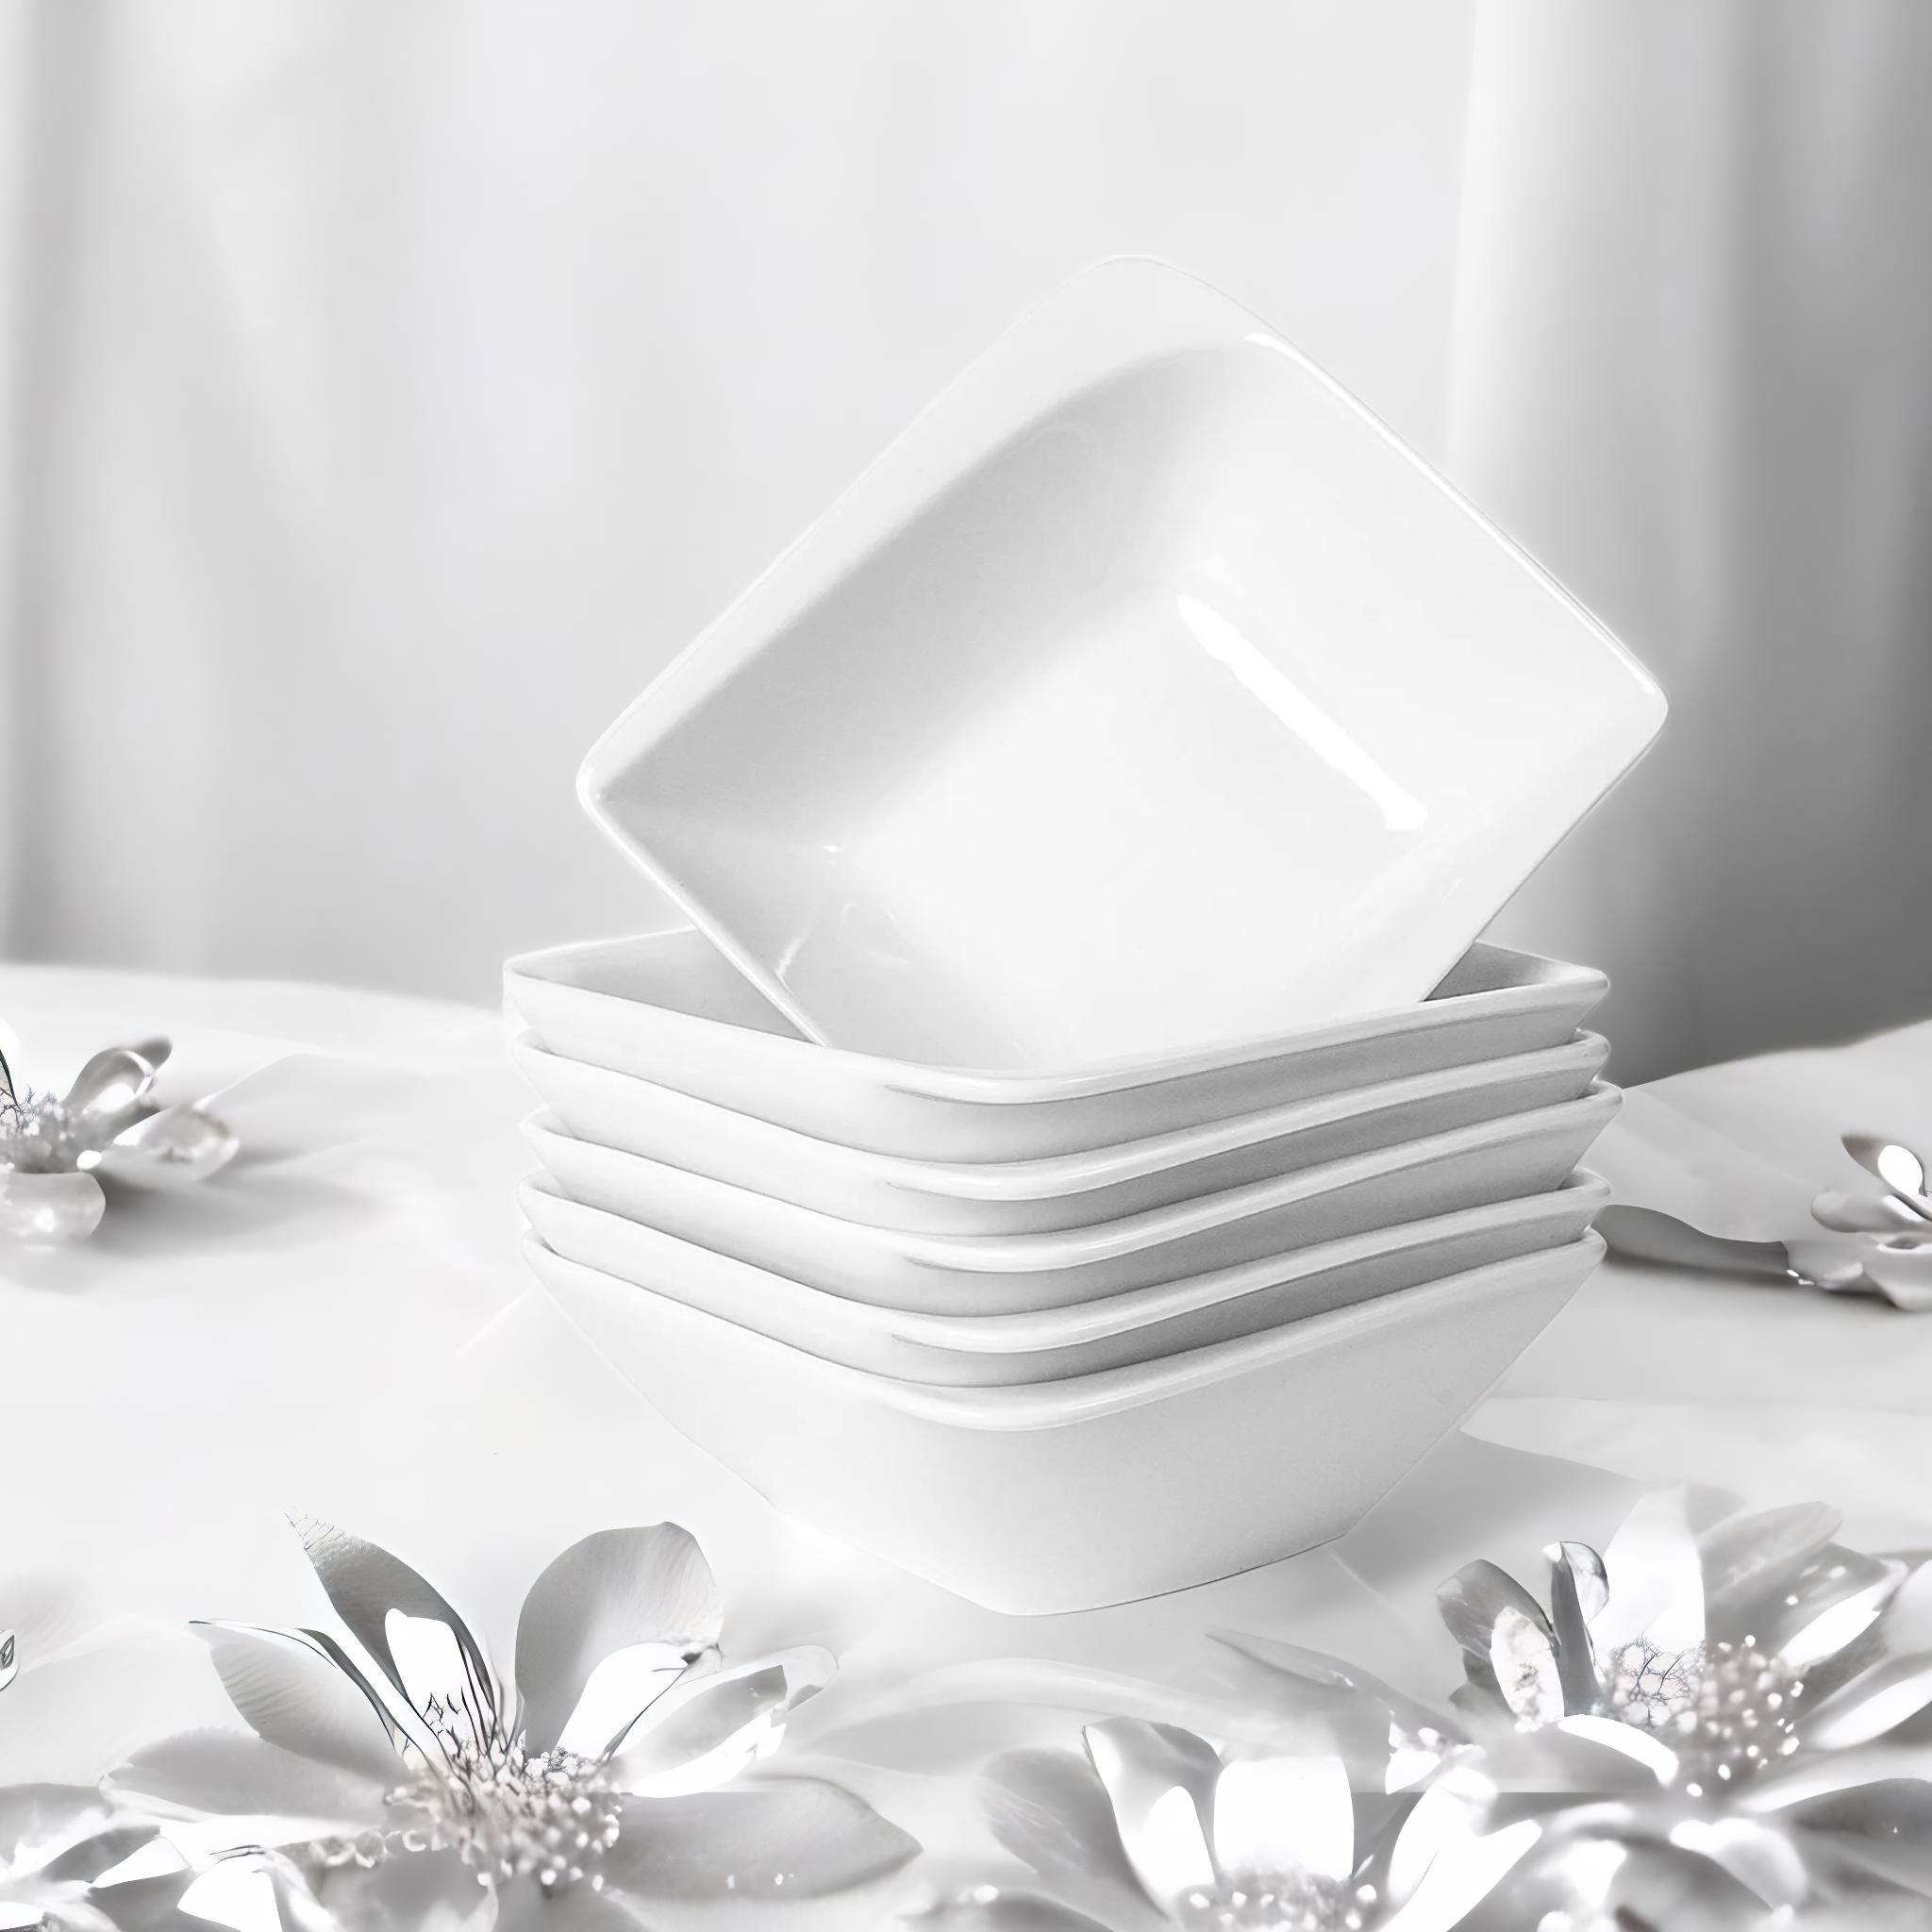 Plates and Bowls Sets, Square Dinnerware Sets, Kitchen Dish Set, Porcelain  White Dinnerware Set